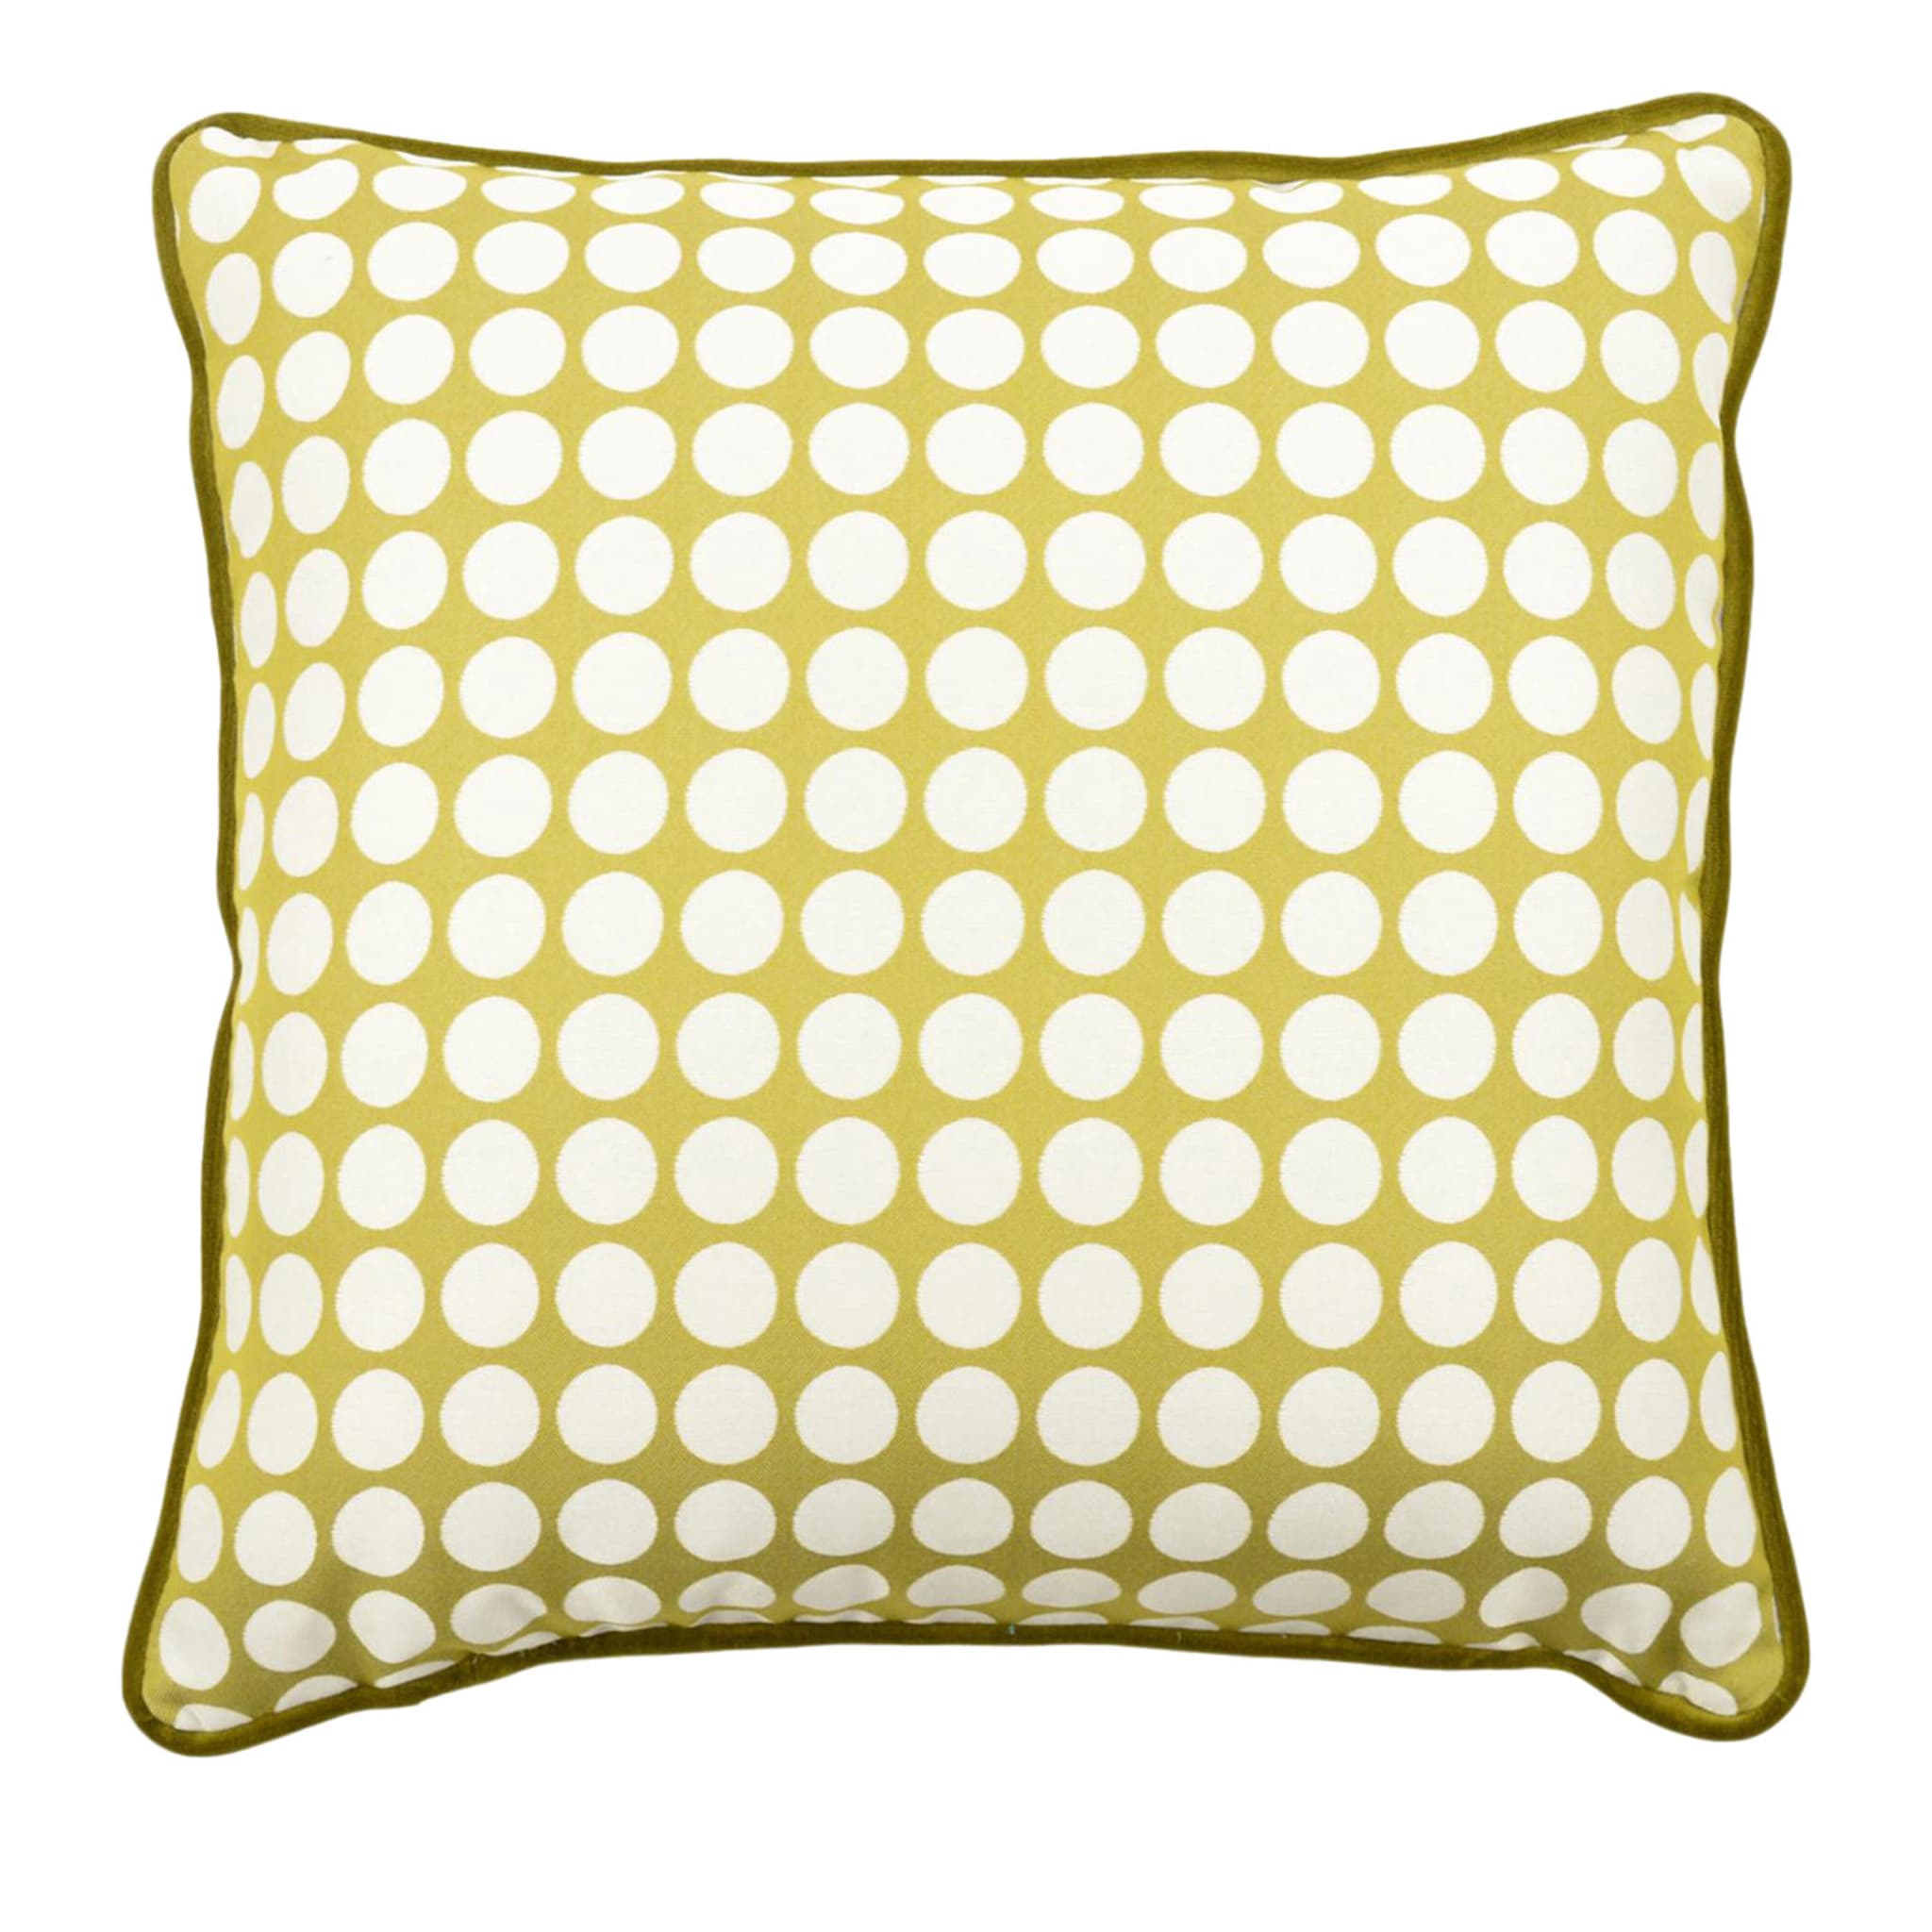 Green Carrè Cushion in polka dots jacquard fabric - Main view